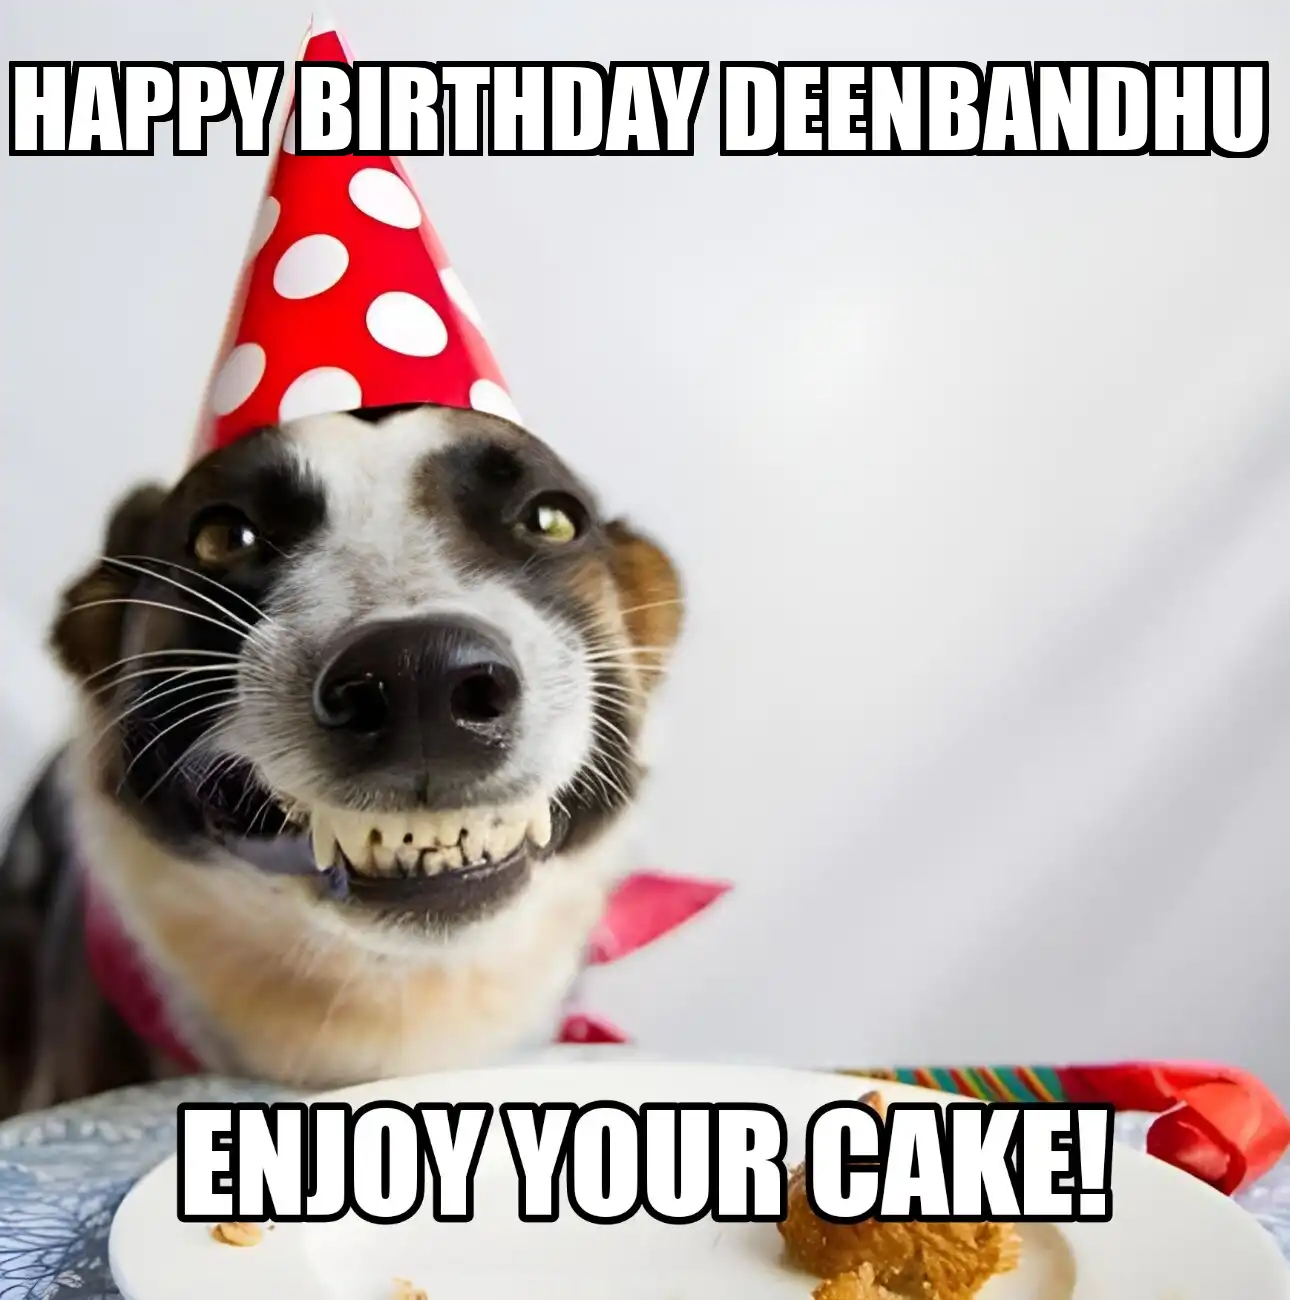 Happy Birthday Deenbandhu Enjoy Your Cake Dog Meme